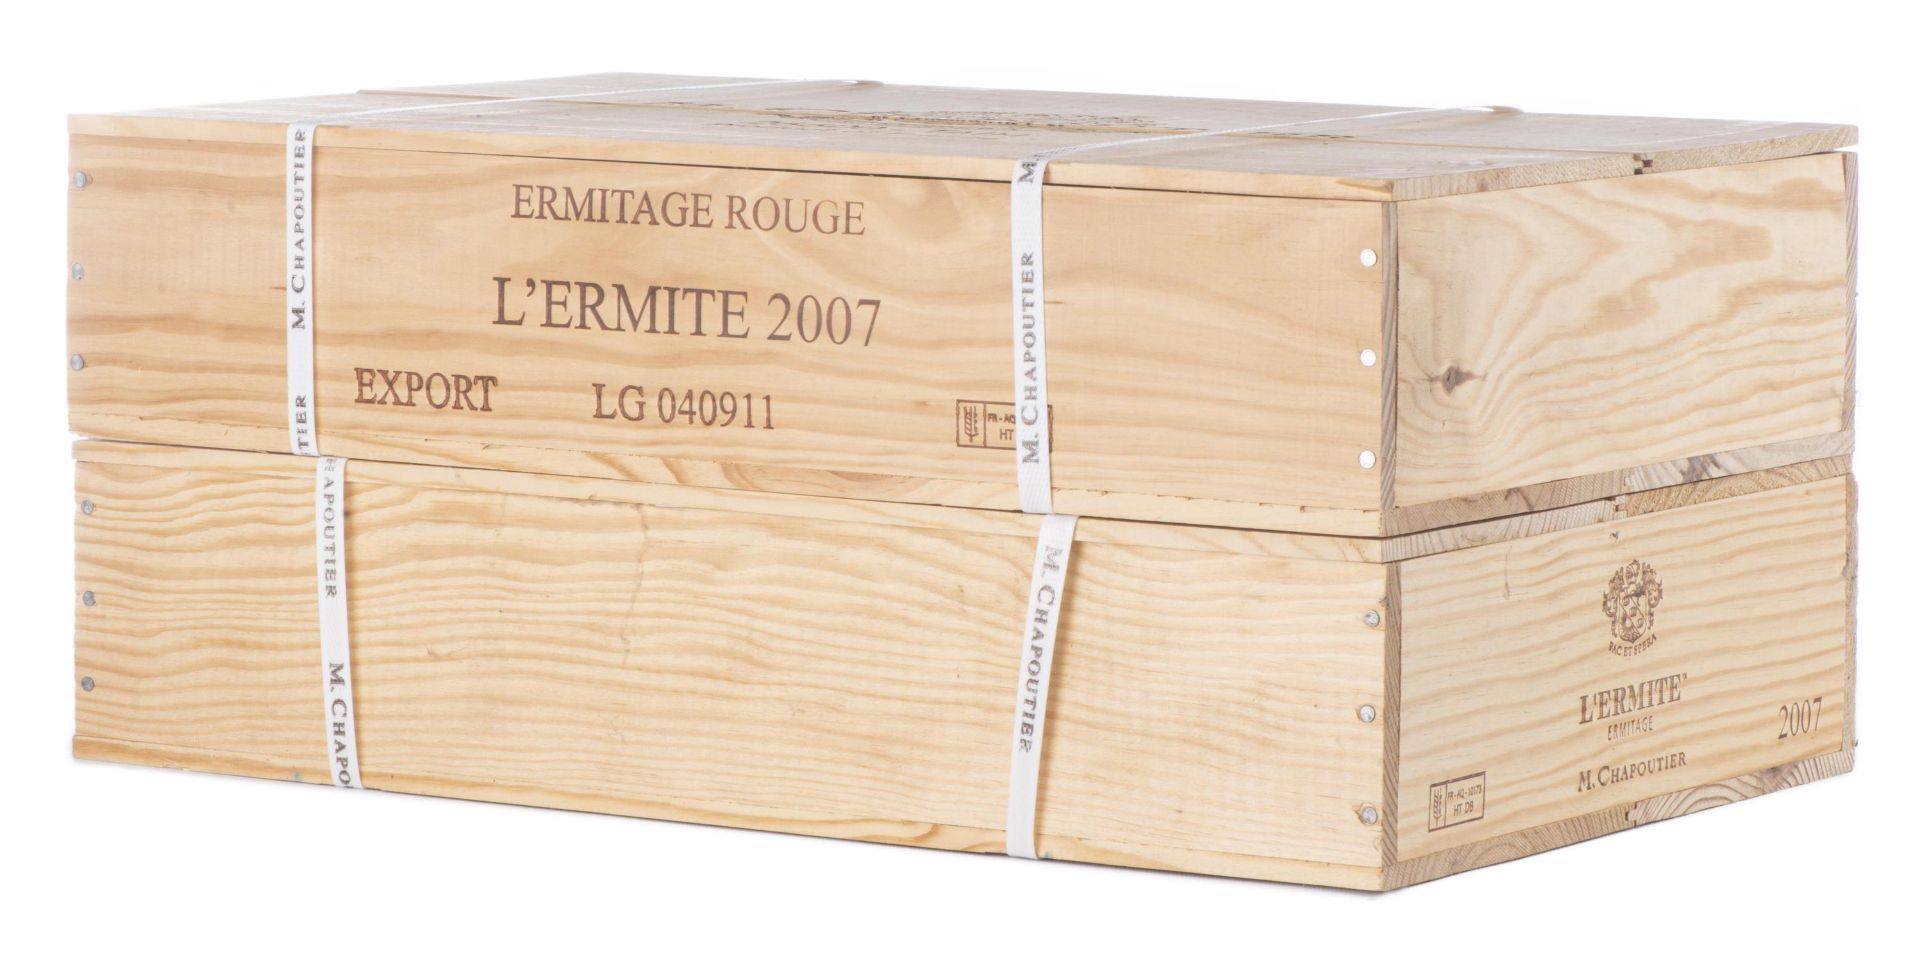 M. Chapoutier, Ermitage «L’Ermite», 2007 - Image 2 of 4